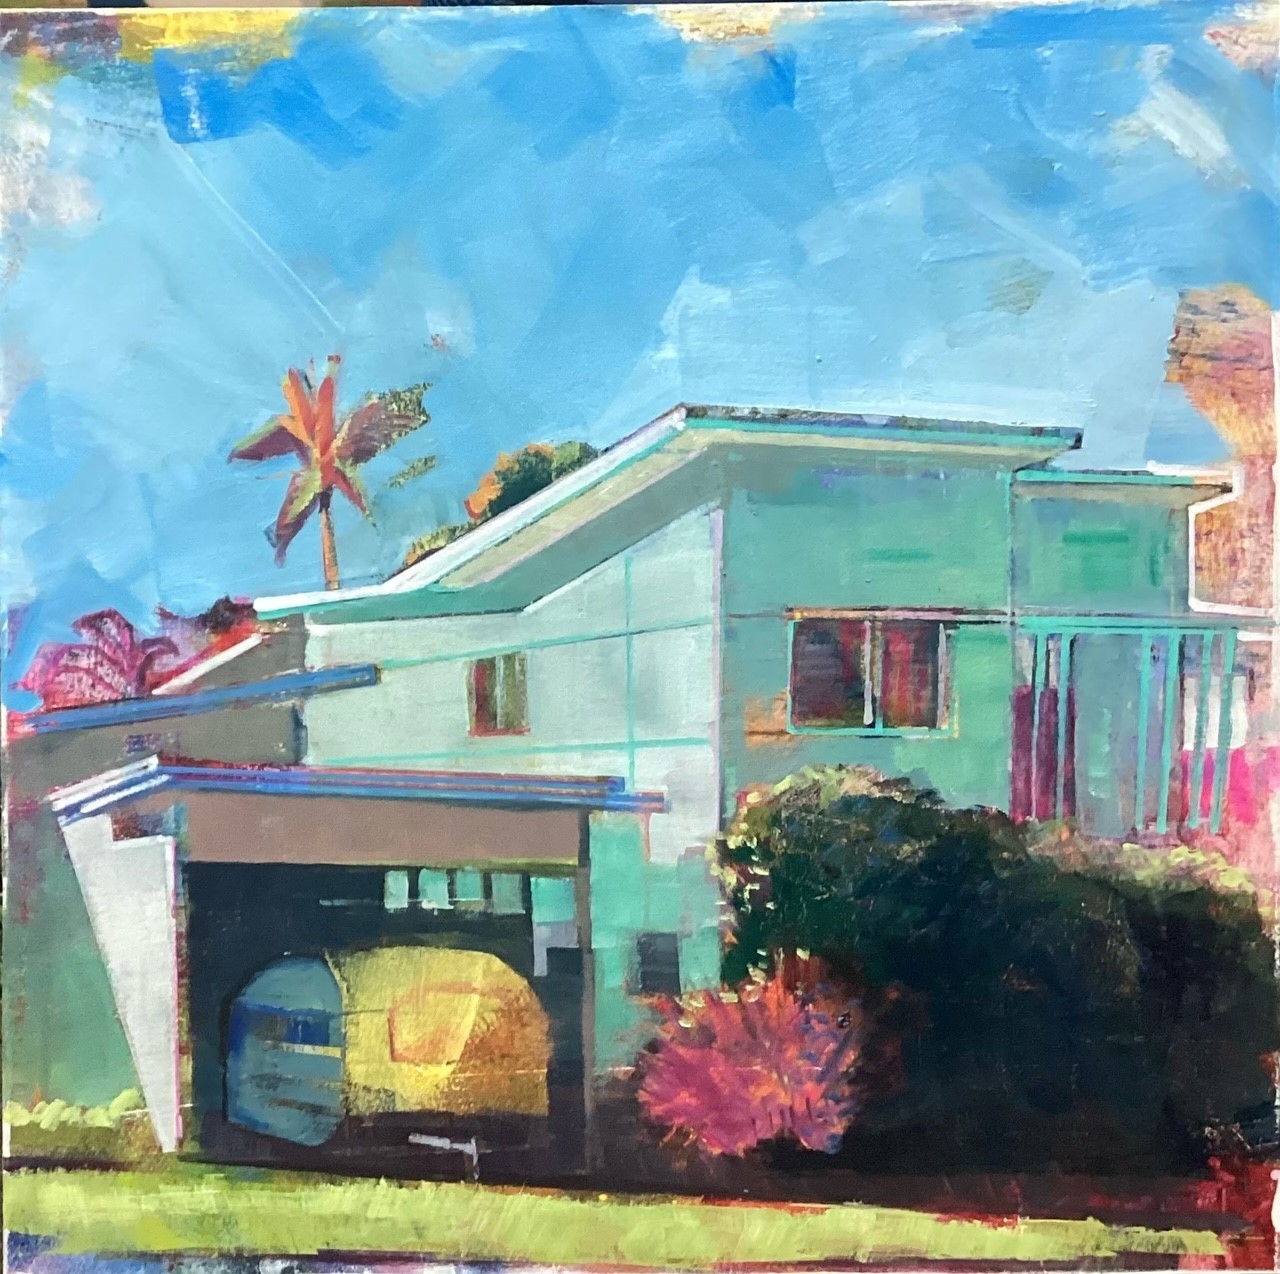 Nick Olsen 'Sunhouse' oil on canvas 30 x 30cm $1500